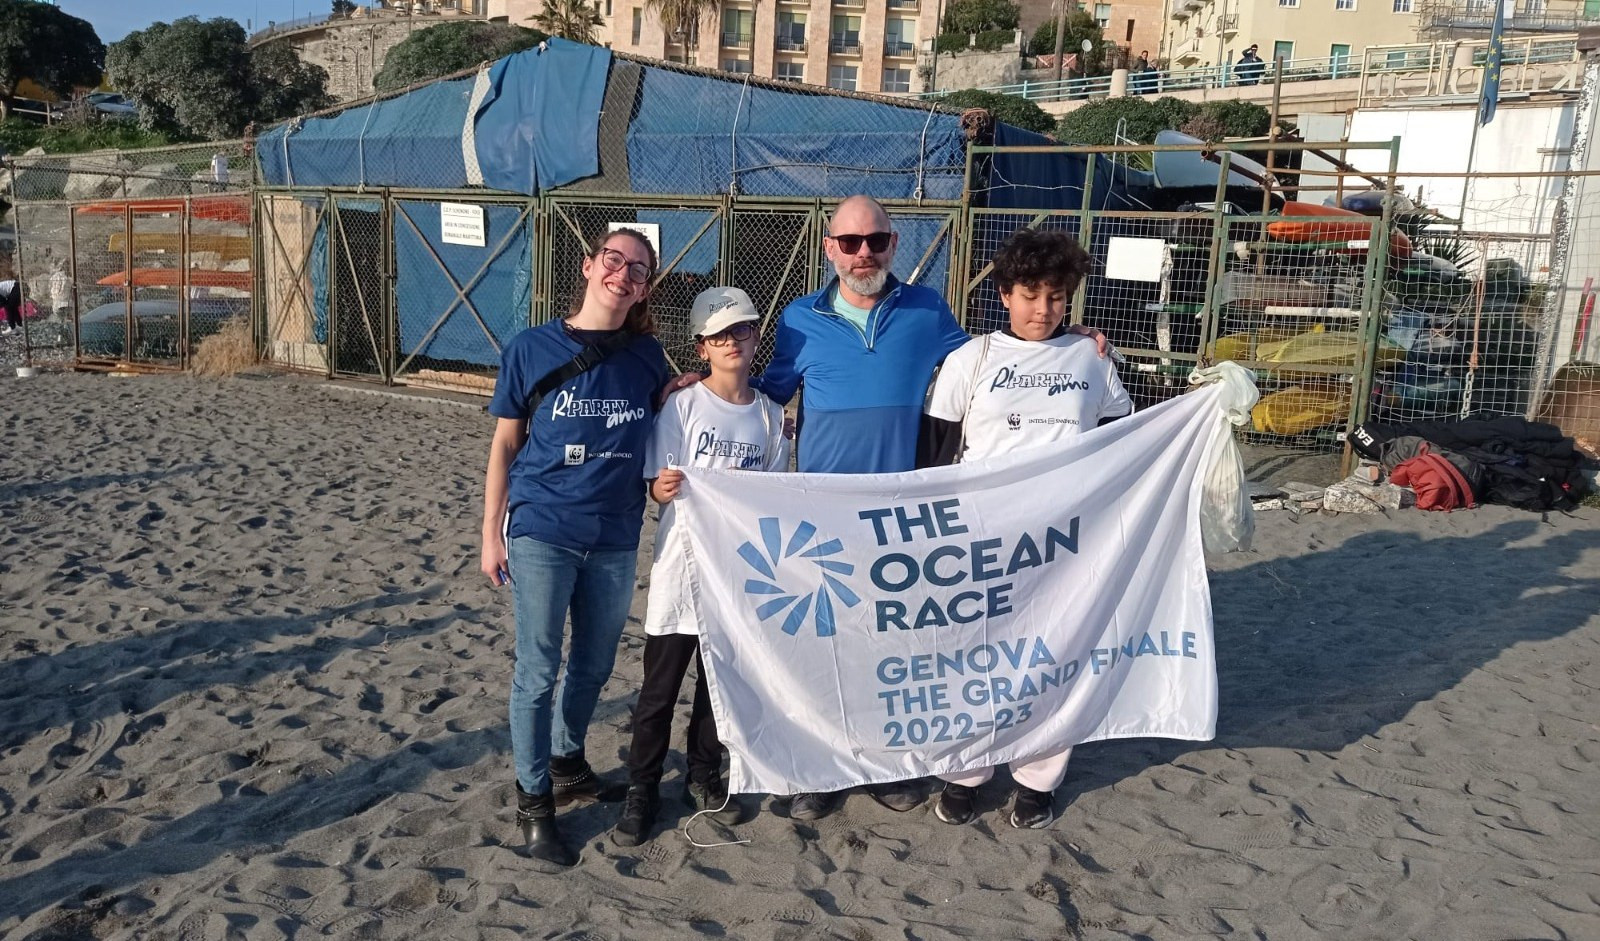 Genova vara il “Learning Program” di The Ocean Race